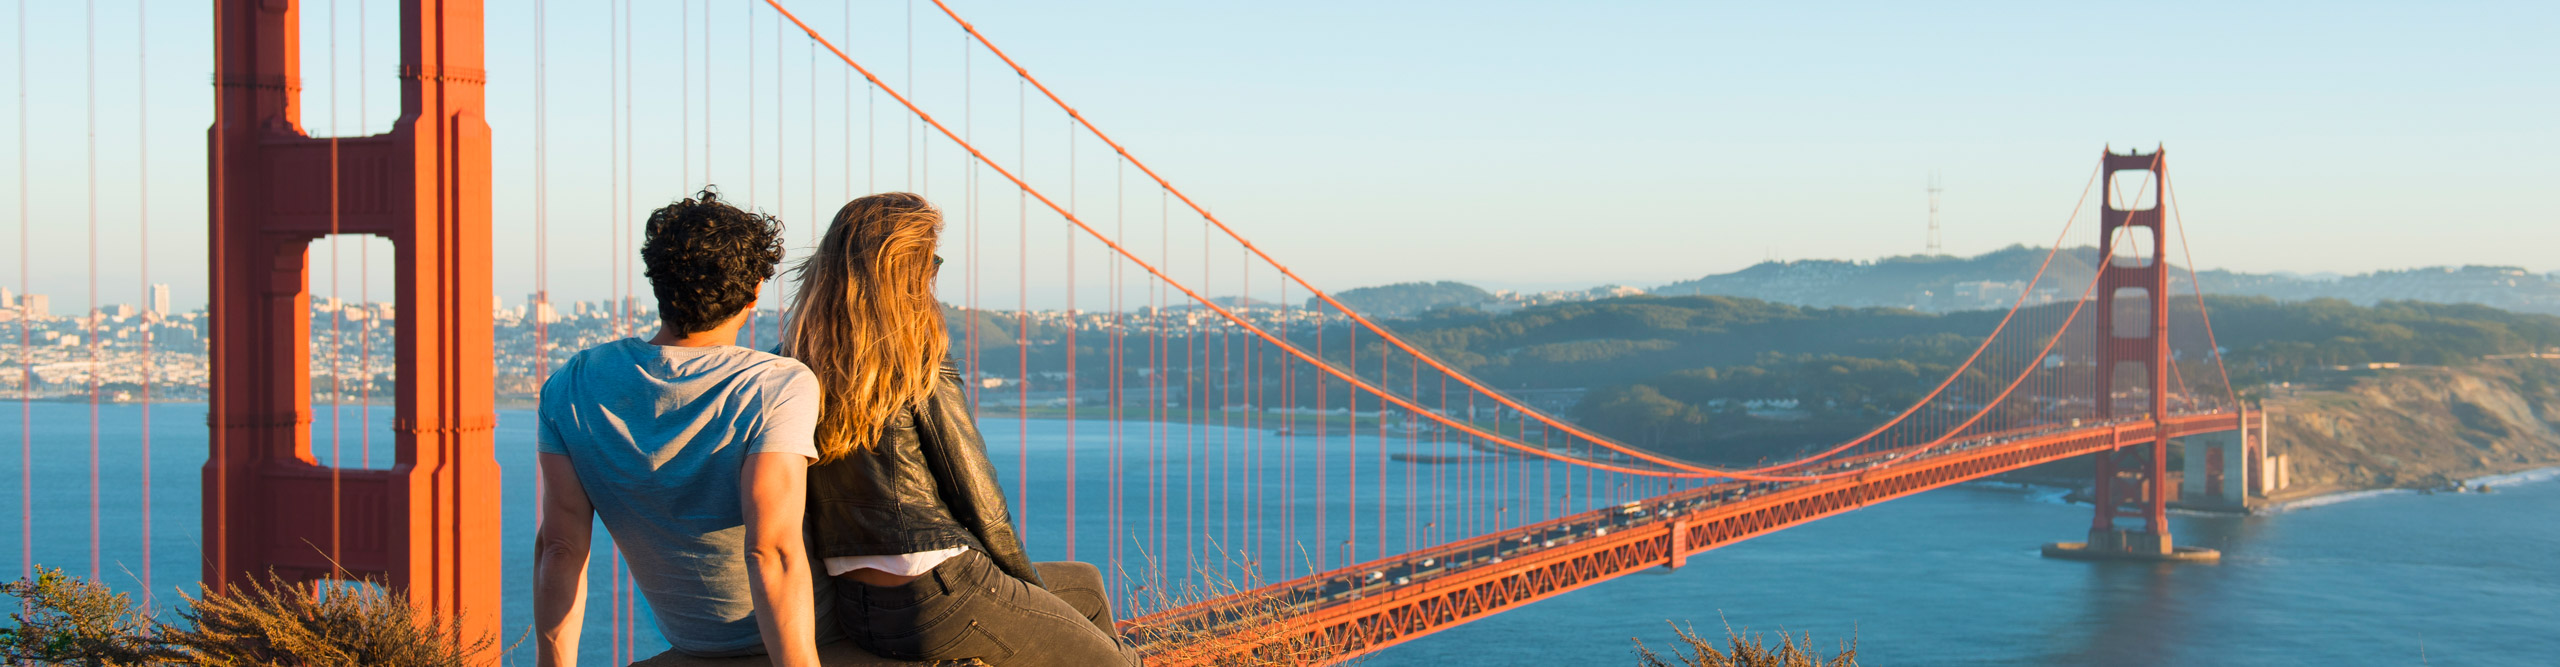 Couple admiring Golden Gate Bridge, on the hill during sunset San Francisco, California, USA